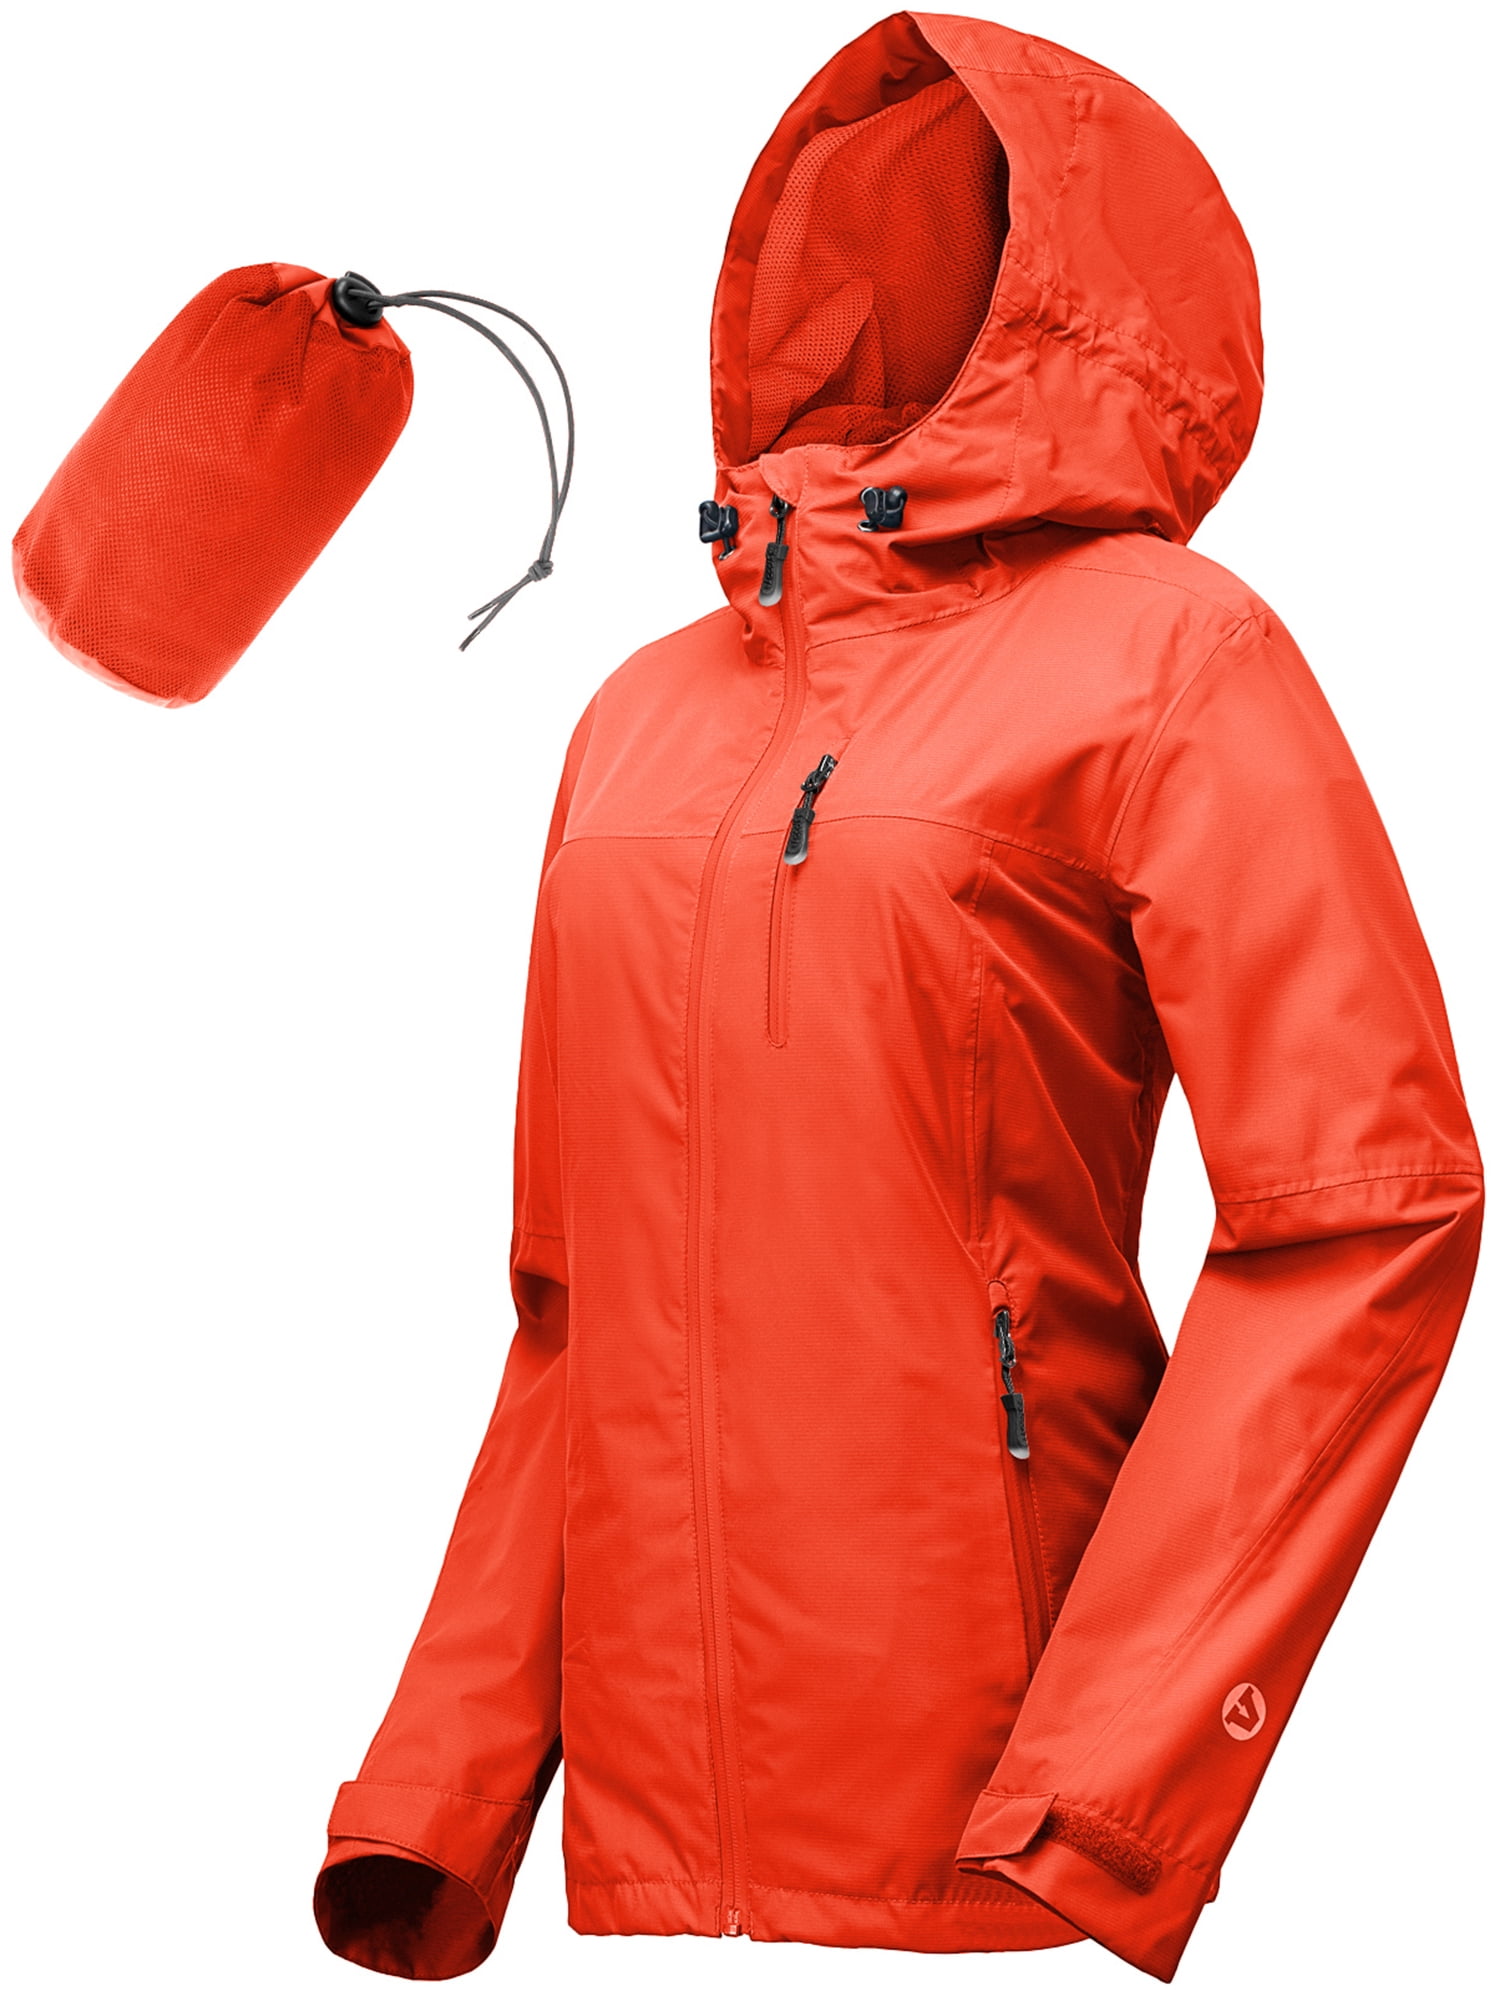 Outdoor Ventures Packable Rain Jacket Women Lightweight Waterproof Raincoat with Hood Cycling Bike Jacket Windbreaker 